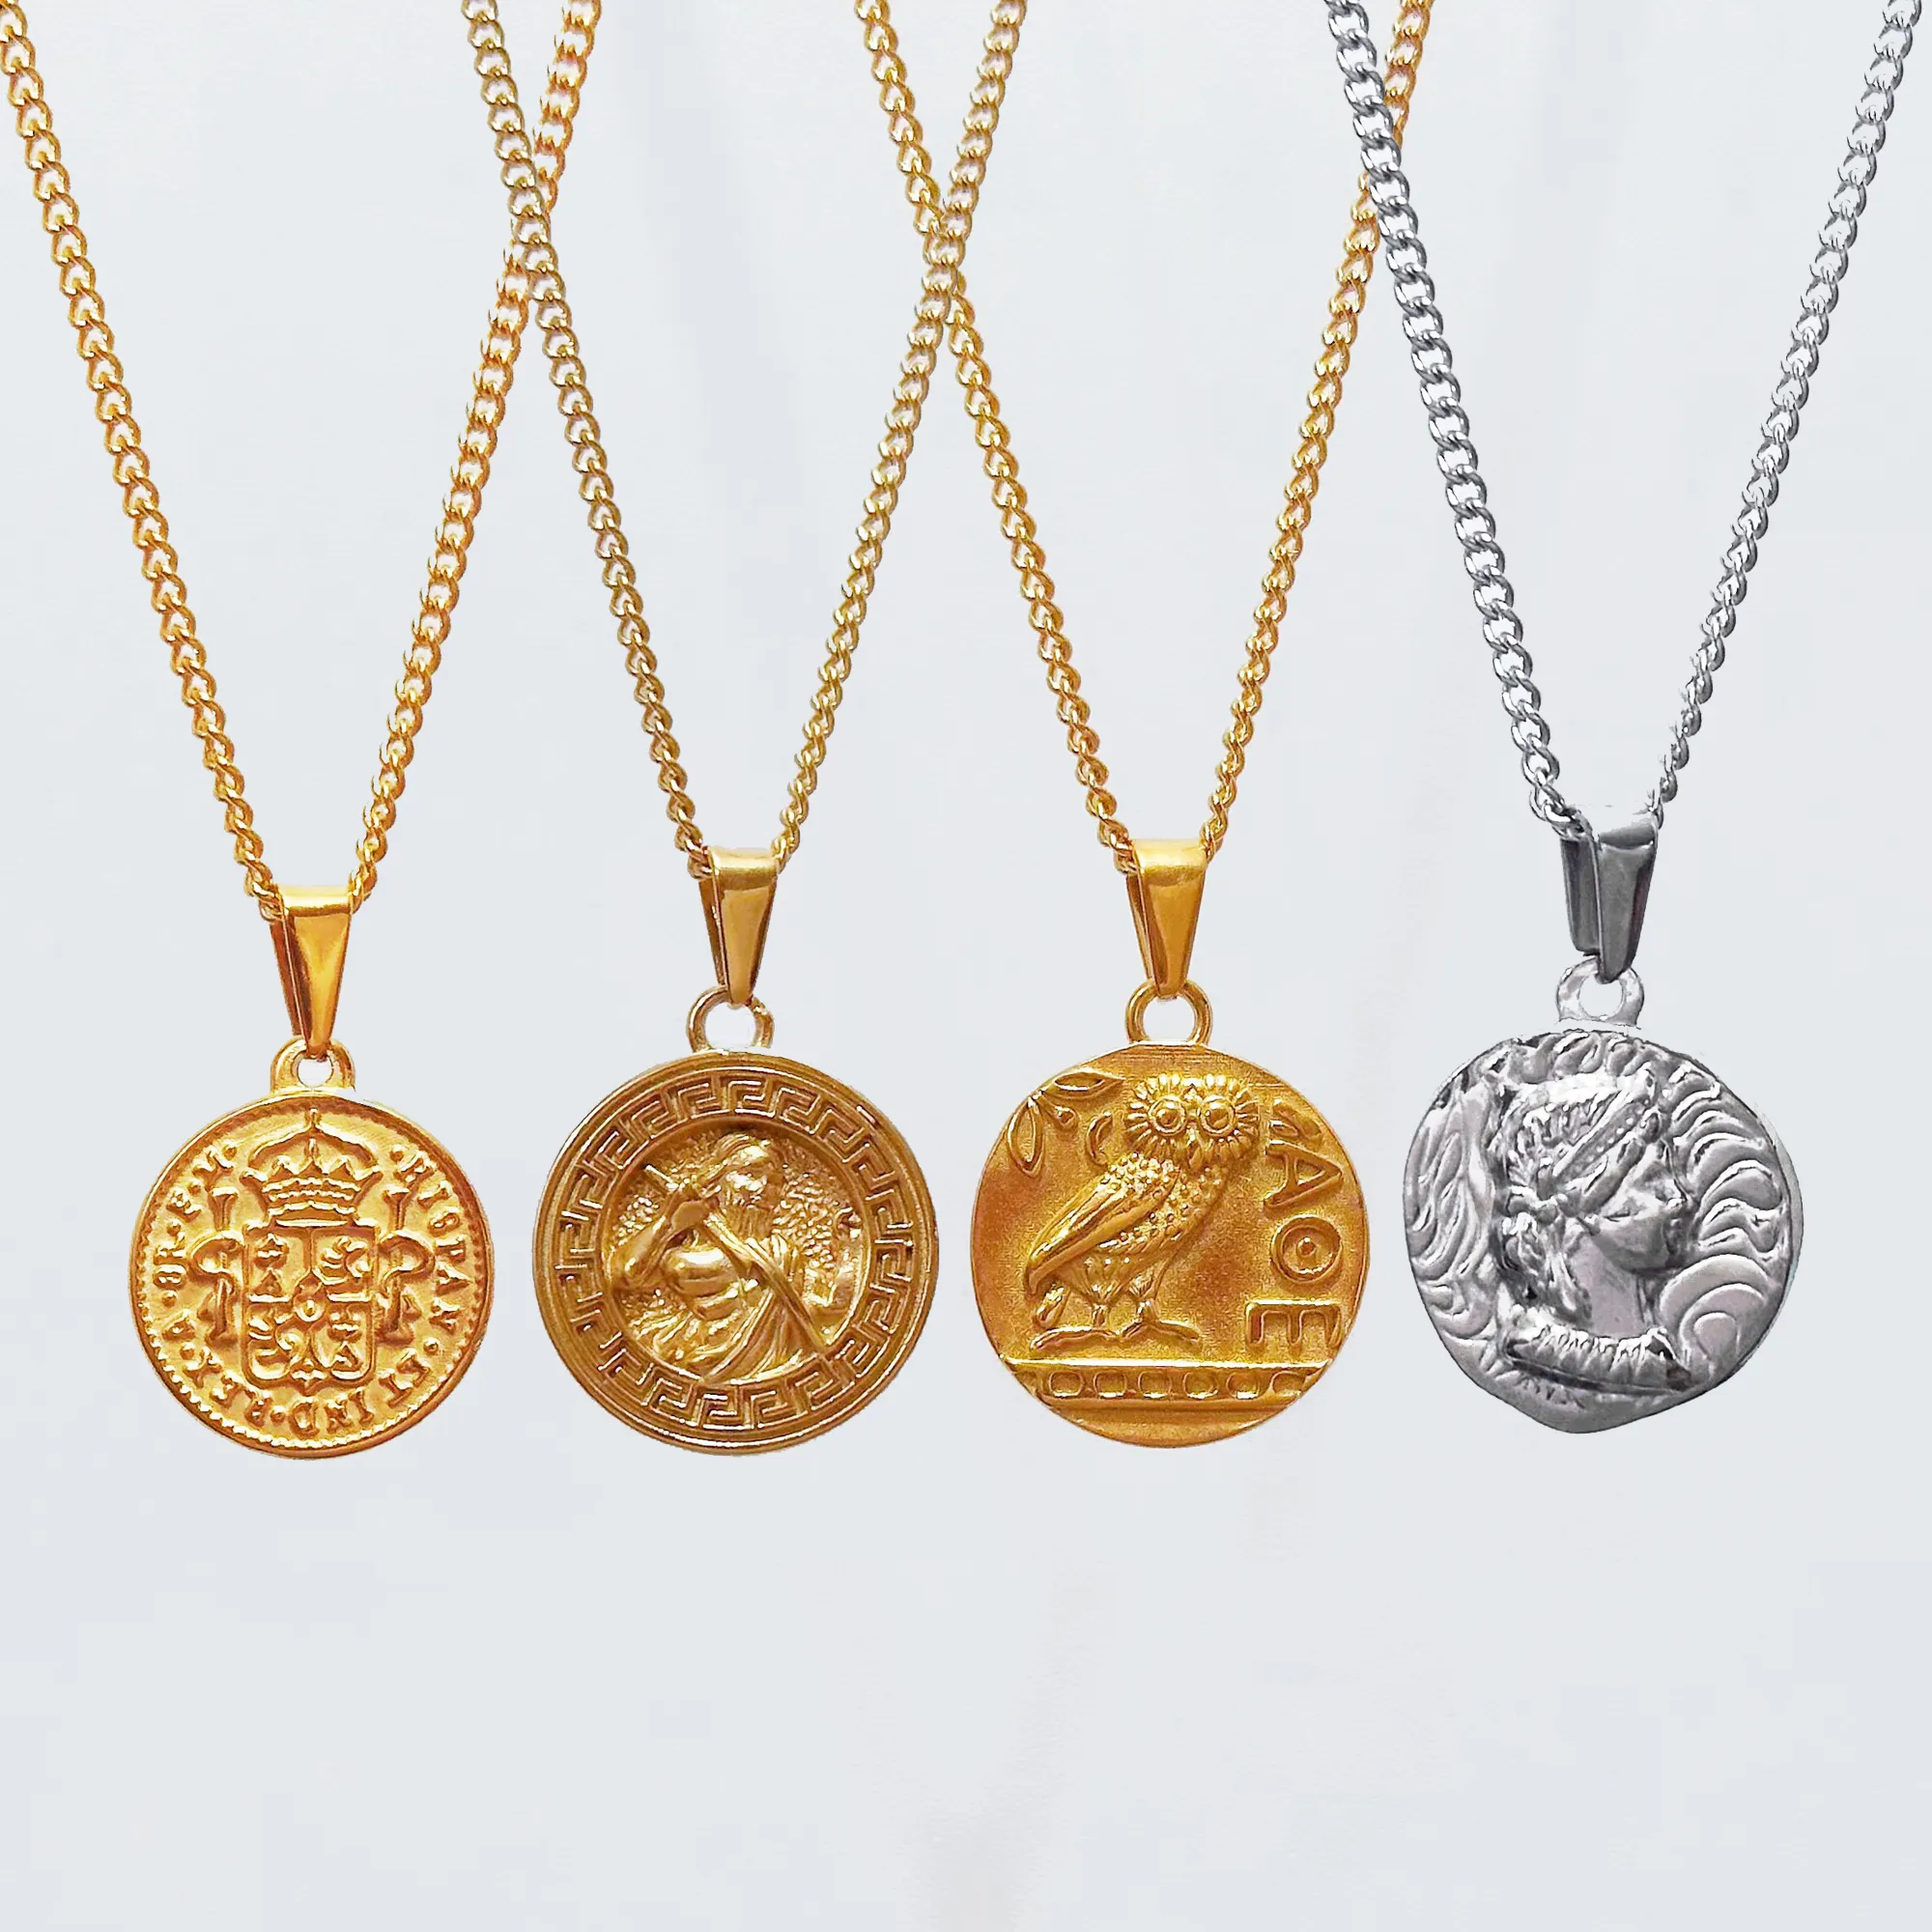 Kalung liontin koin Raja struktur Spanyol desain antik liontin emas 18k baja tahan karat kalung medali keberuntungan untuk pria wanita